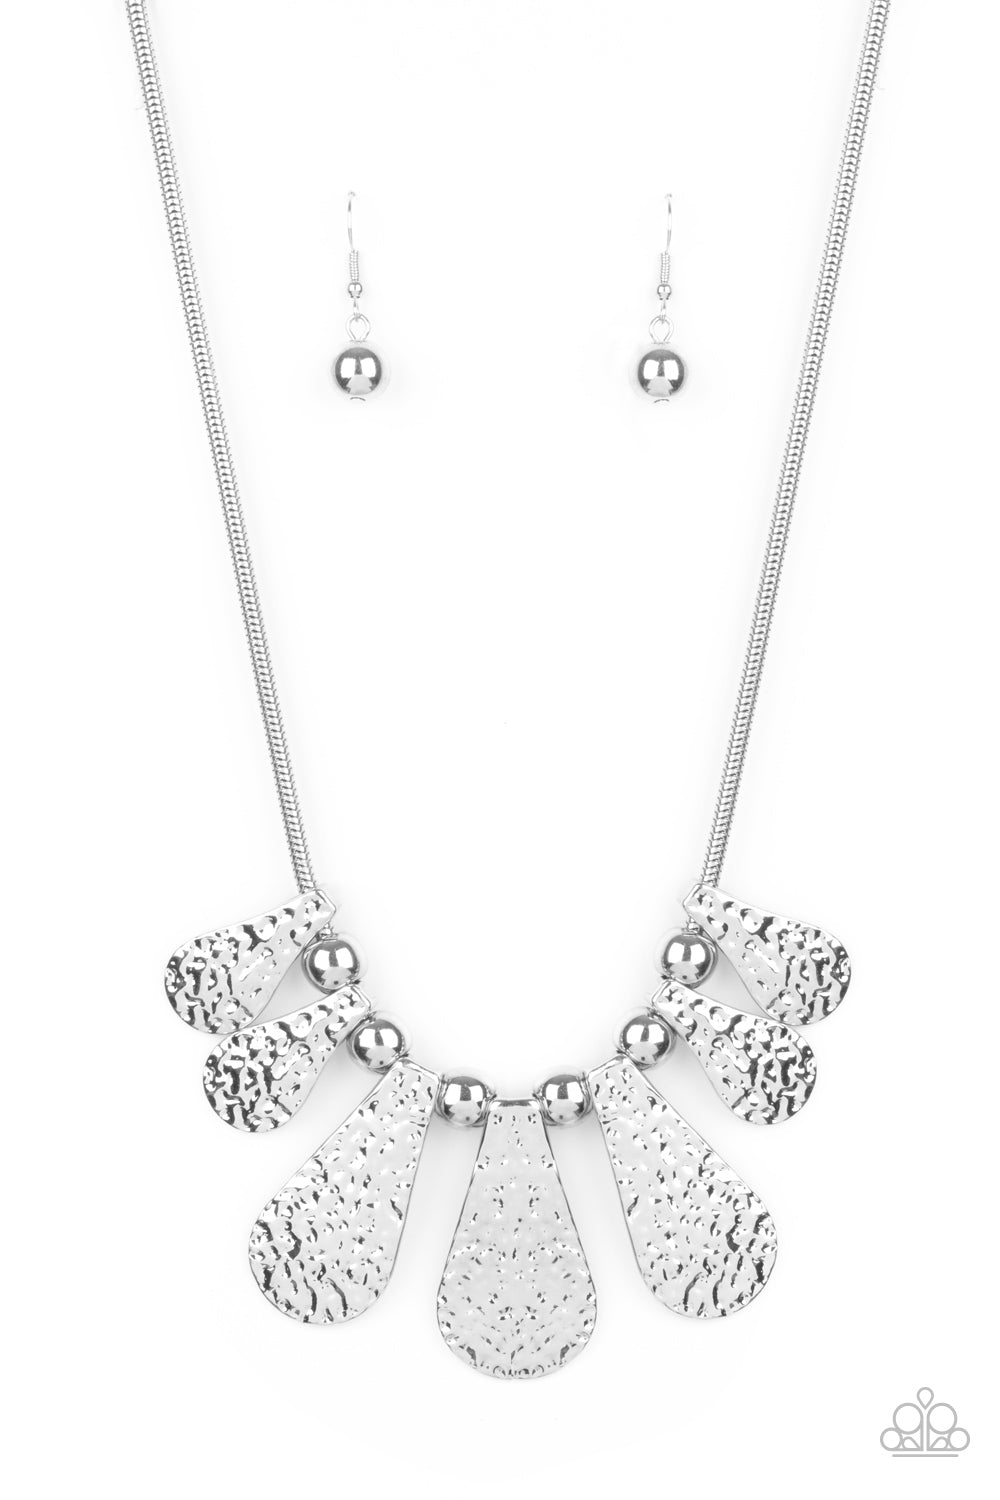 Gallery Goddess - Silver Necklace Set - Princess Glam Shop